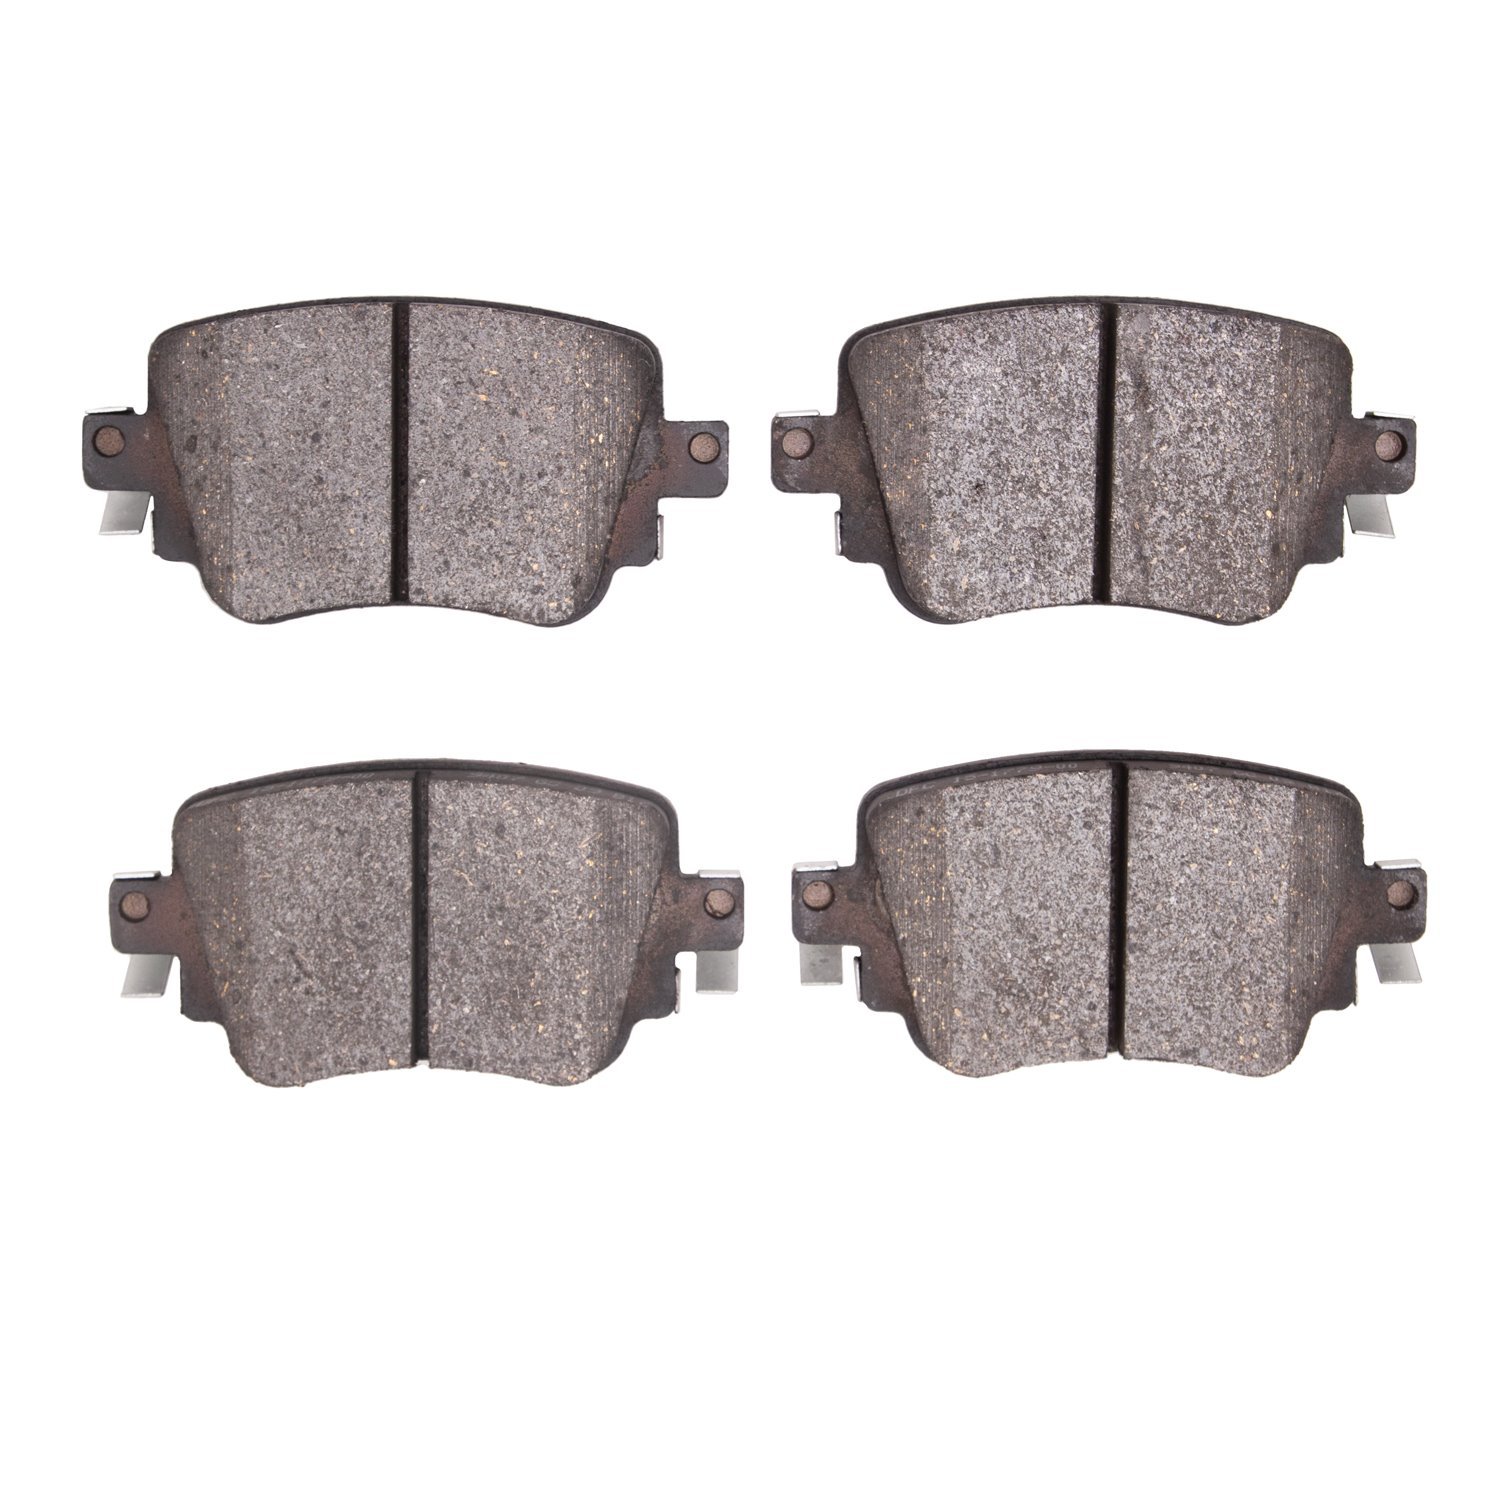 1551-1779-00 5000 Advanced Ceramic Brake Pads, Fits Select Audi/Volkswagen, Position: Rear